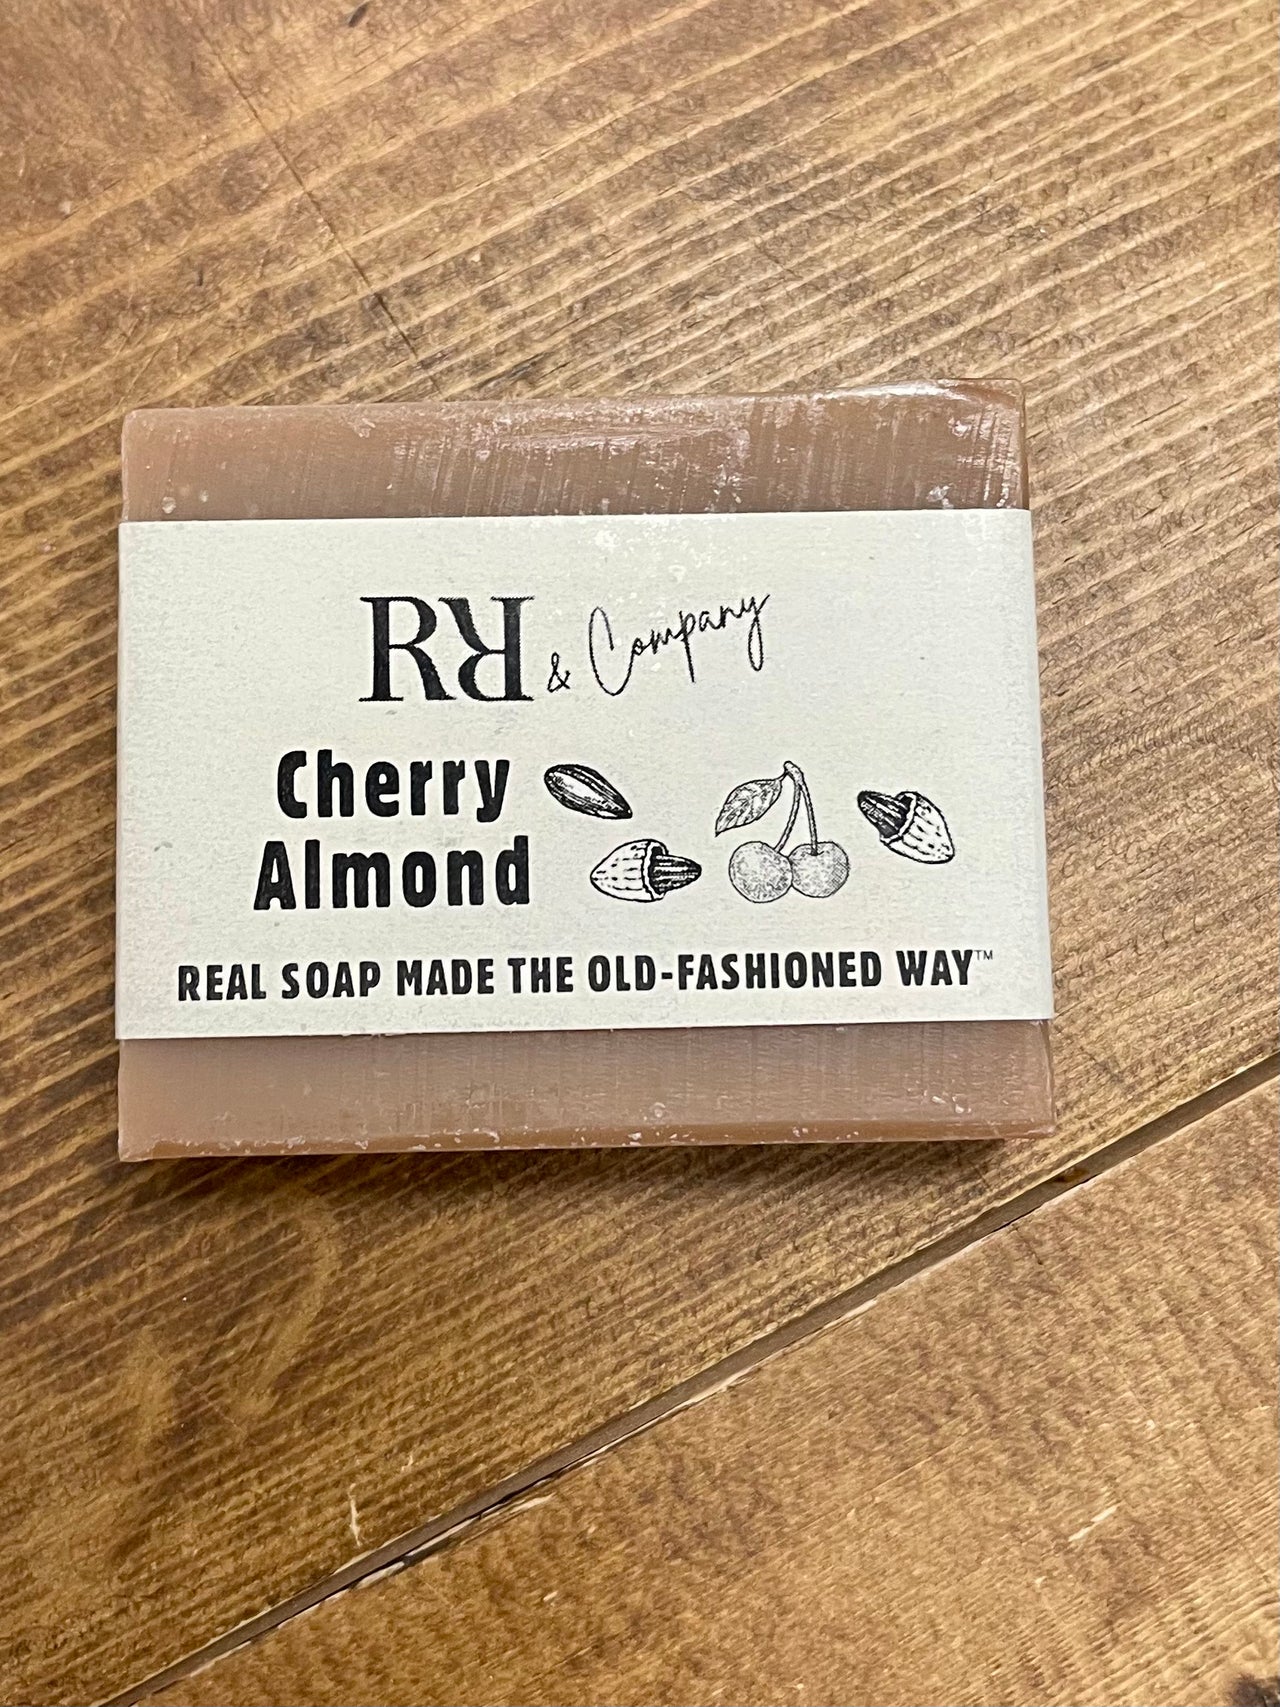 Cherry Almond Soap - RR & CO